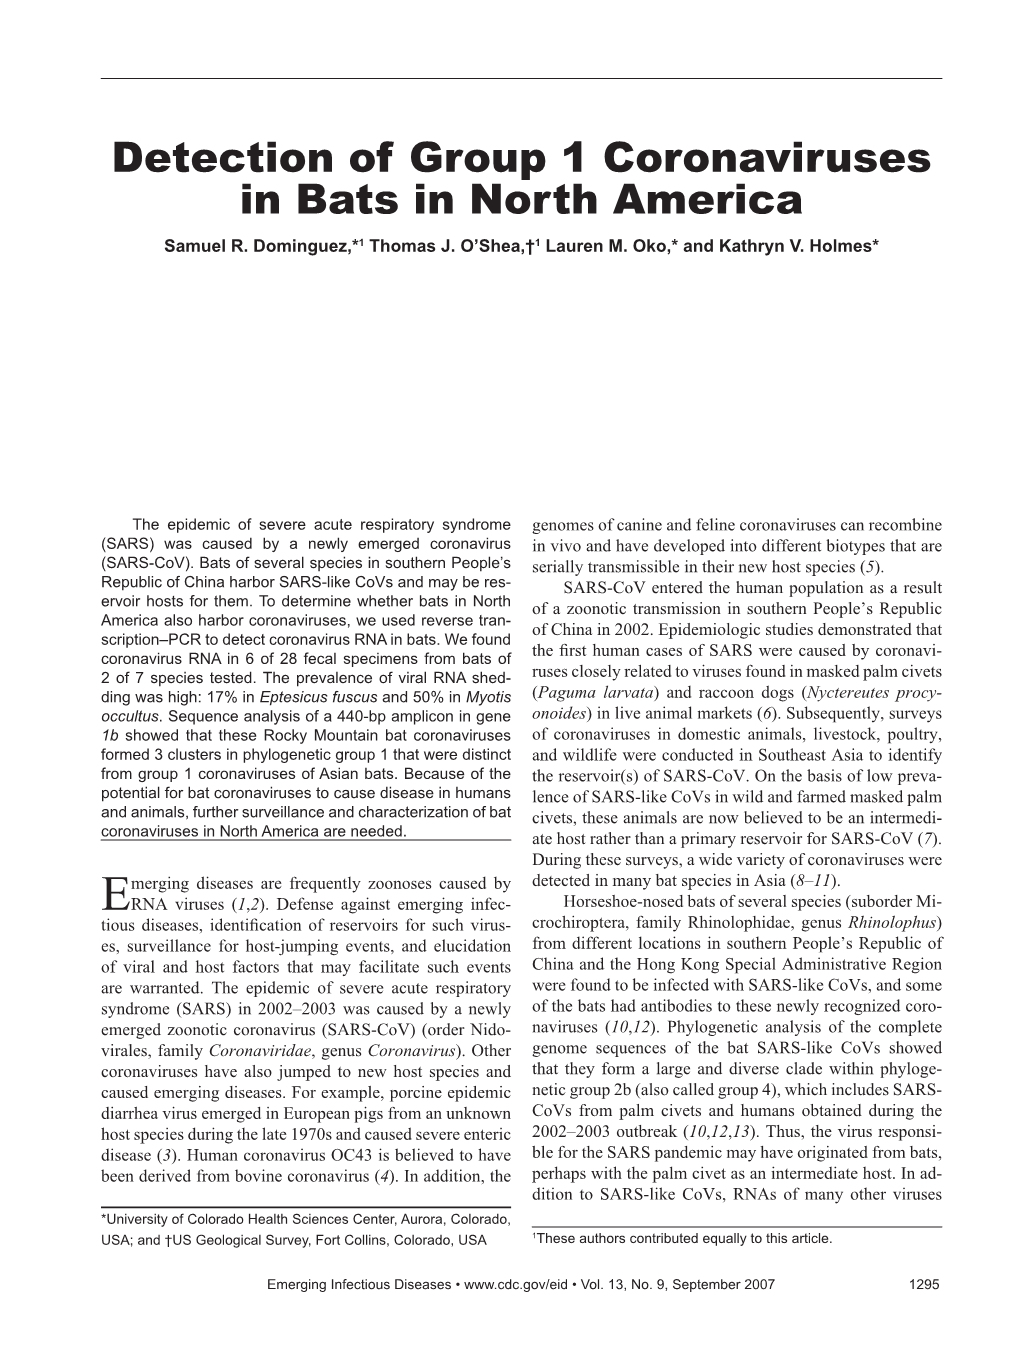 Detection of Group 1 Coronaviruses in Bats in North America Samuel R